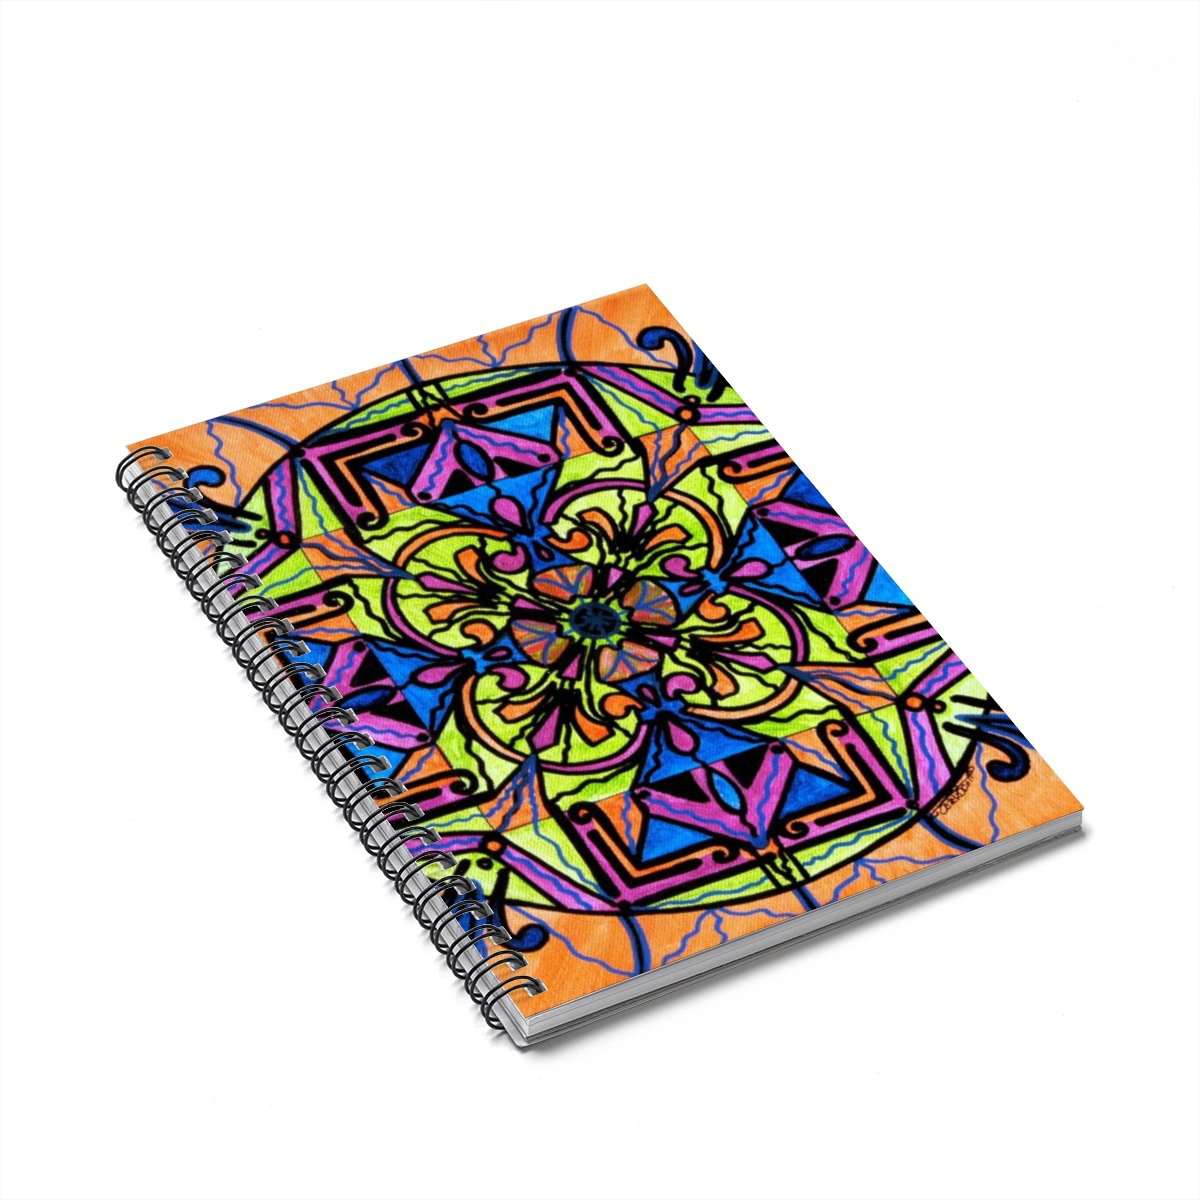 Uplift - Spiral Notebook